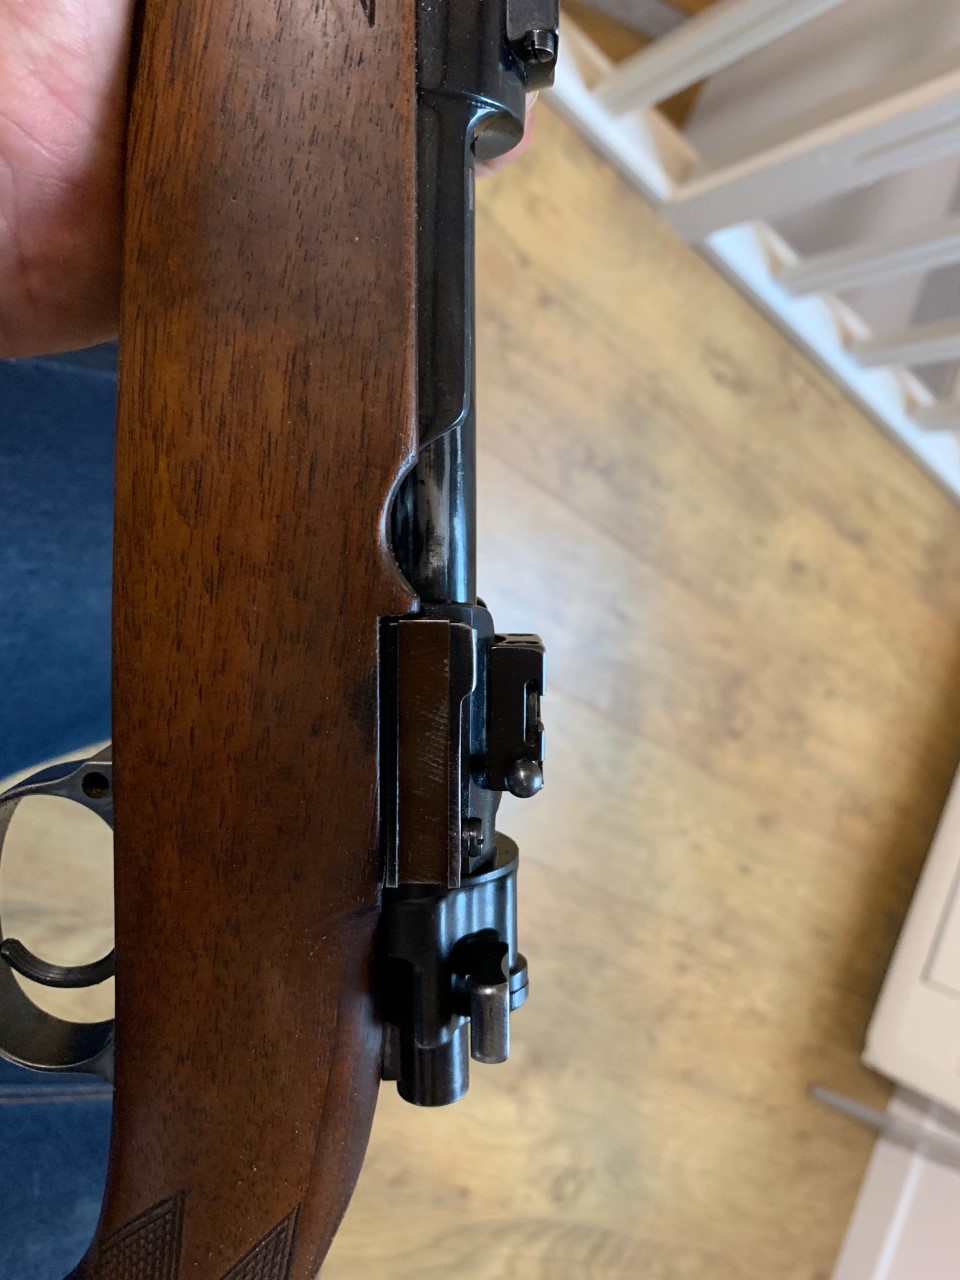 270 7x64 - Identification carabine 7x64 Thumbn19